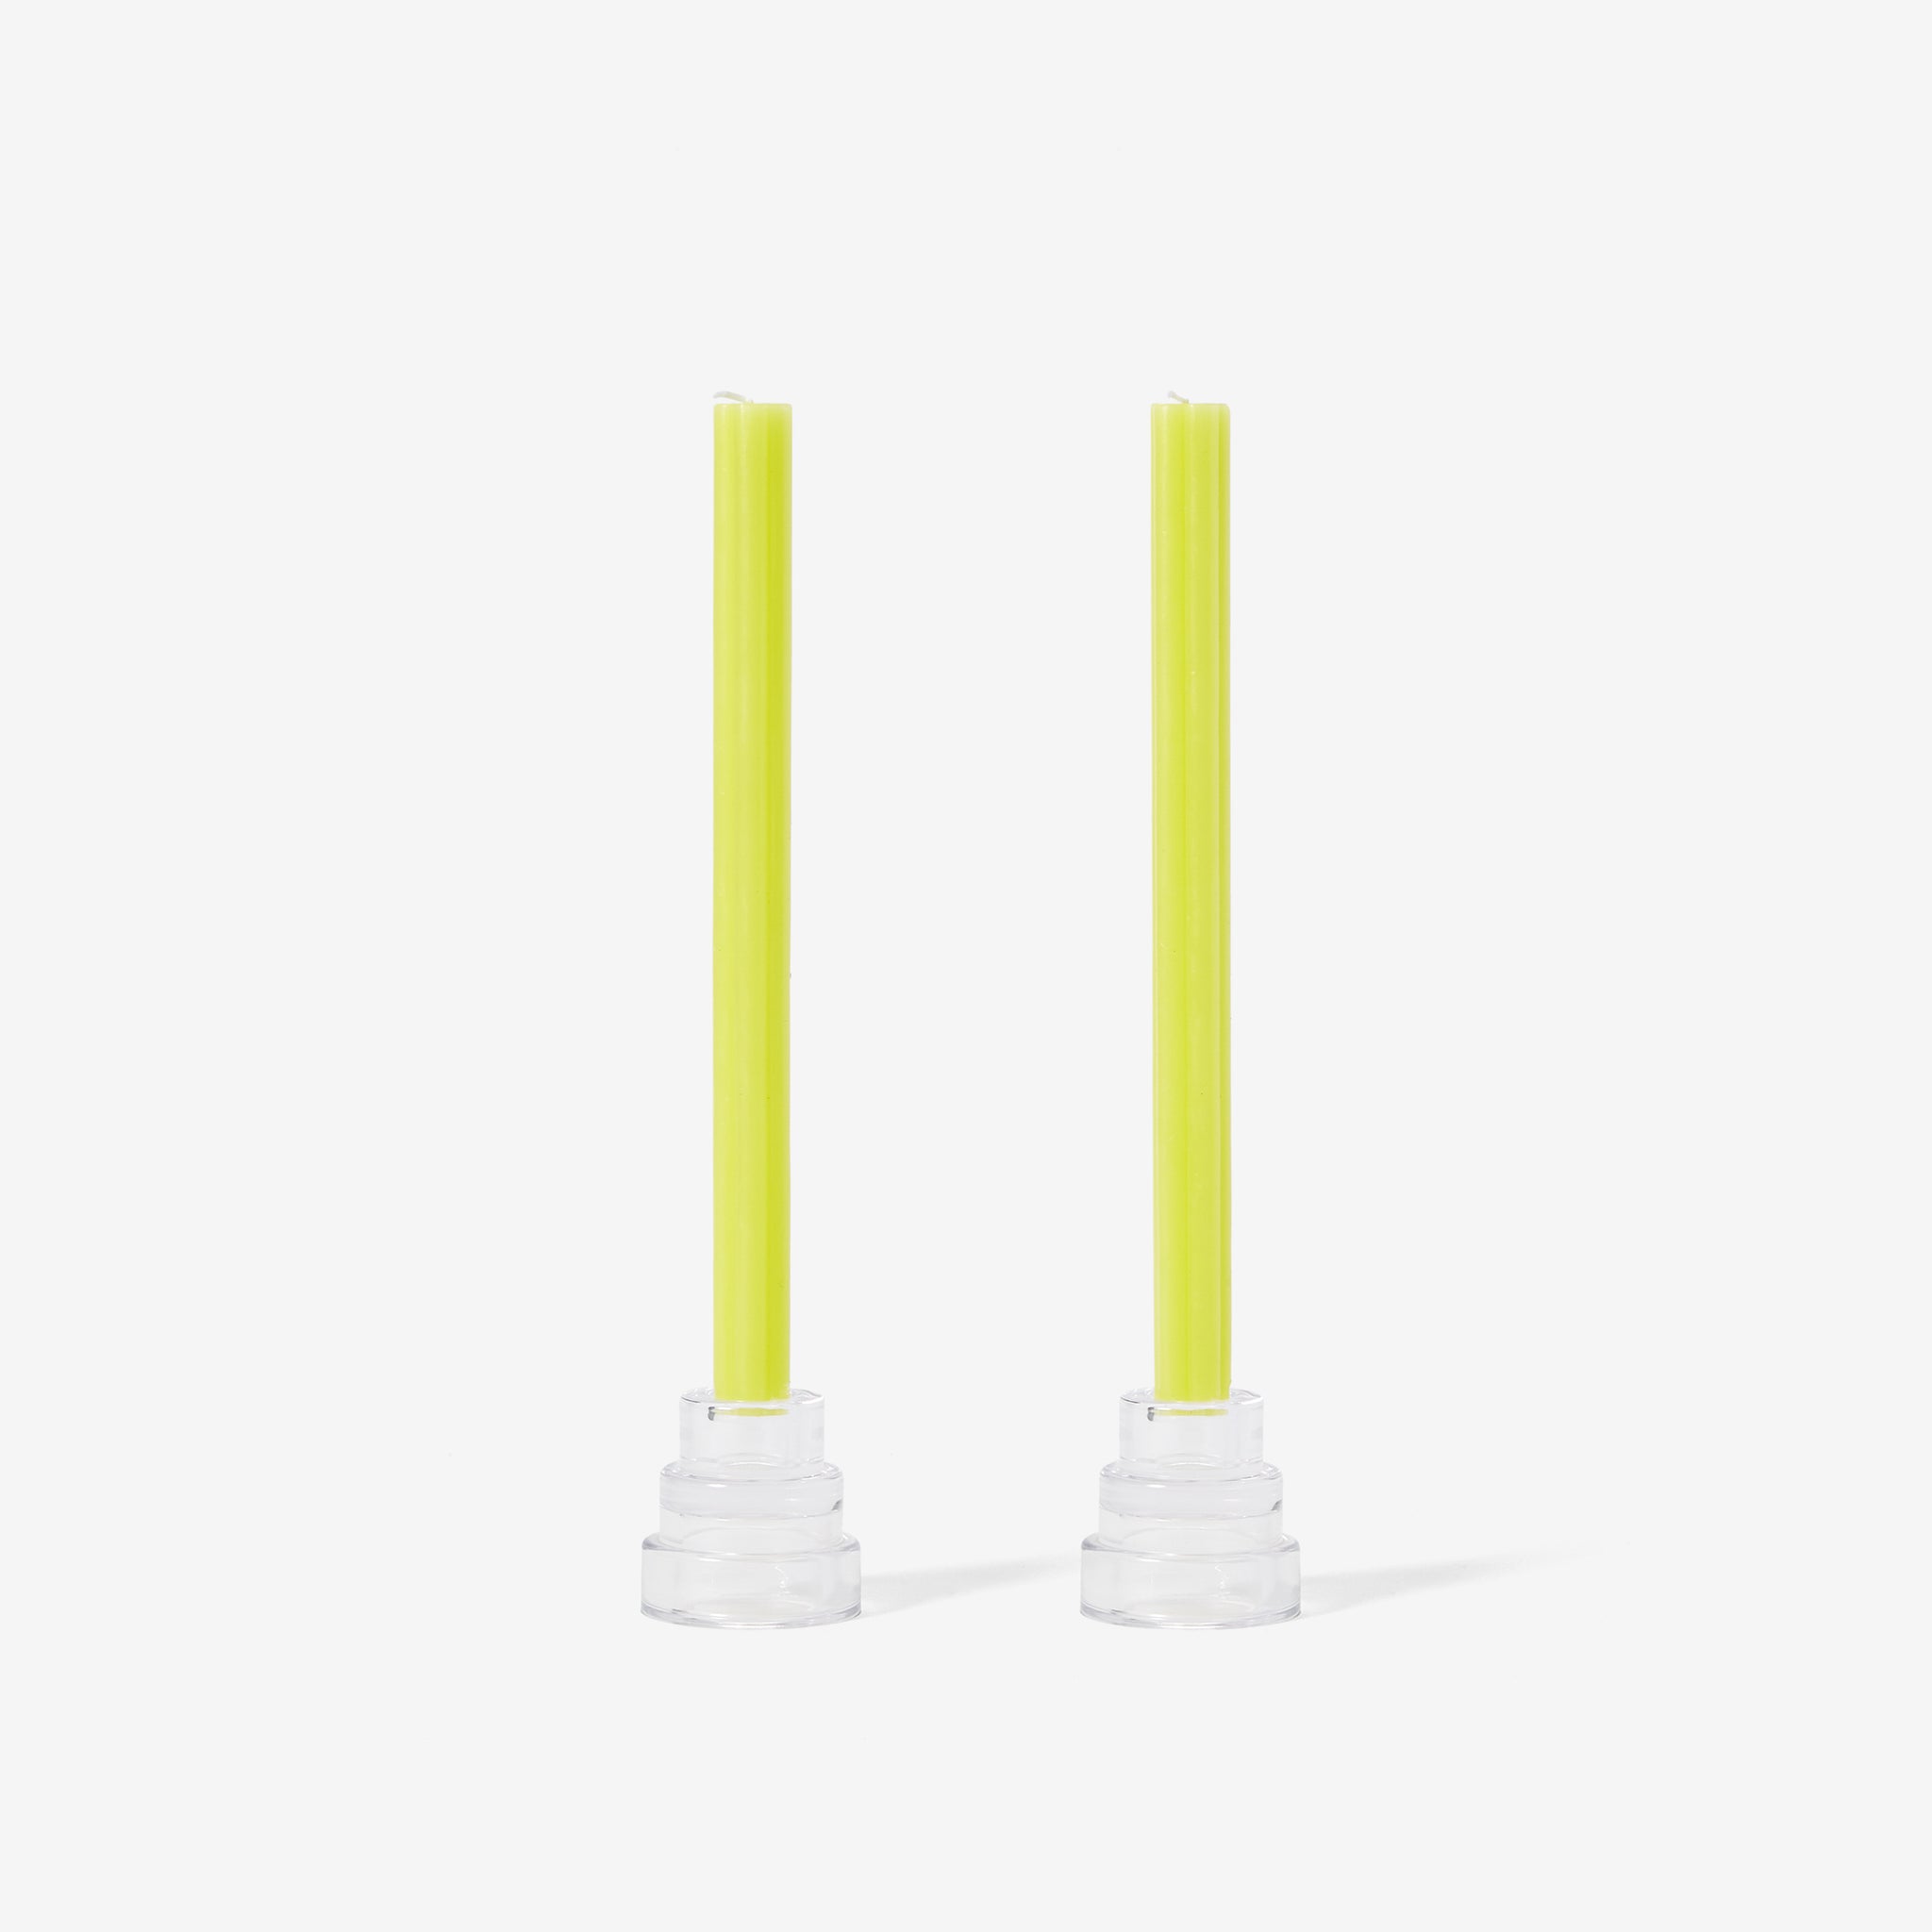 Dusen Dusen Taper Candles - Set of 2